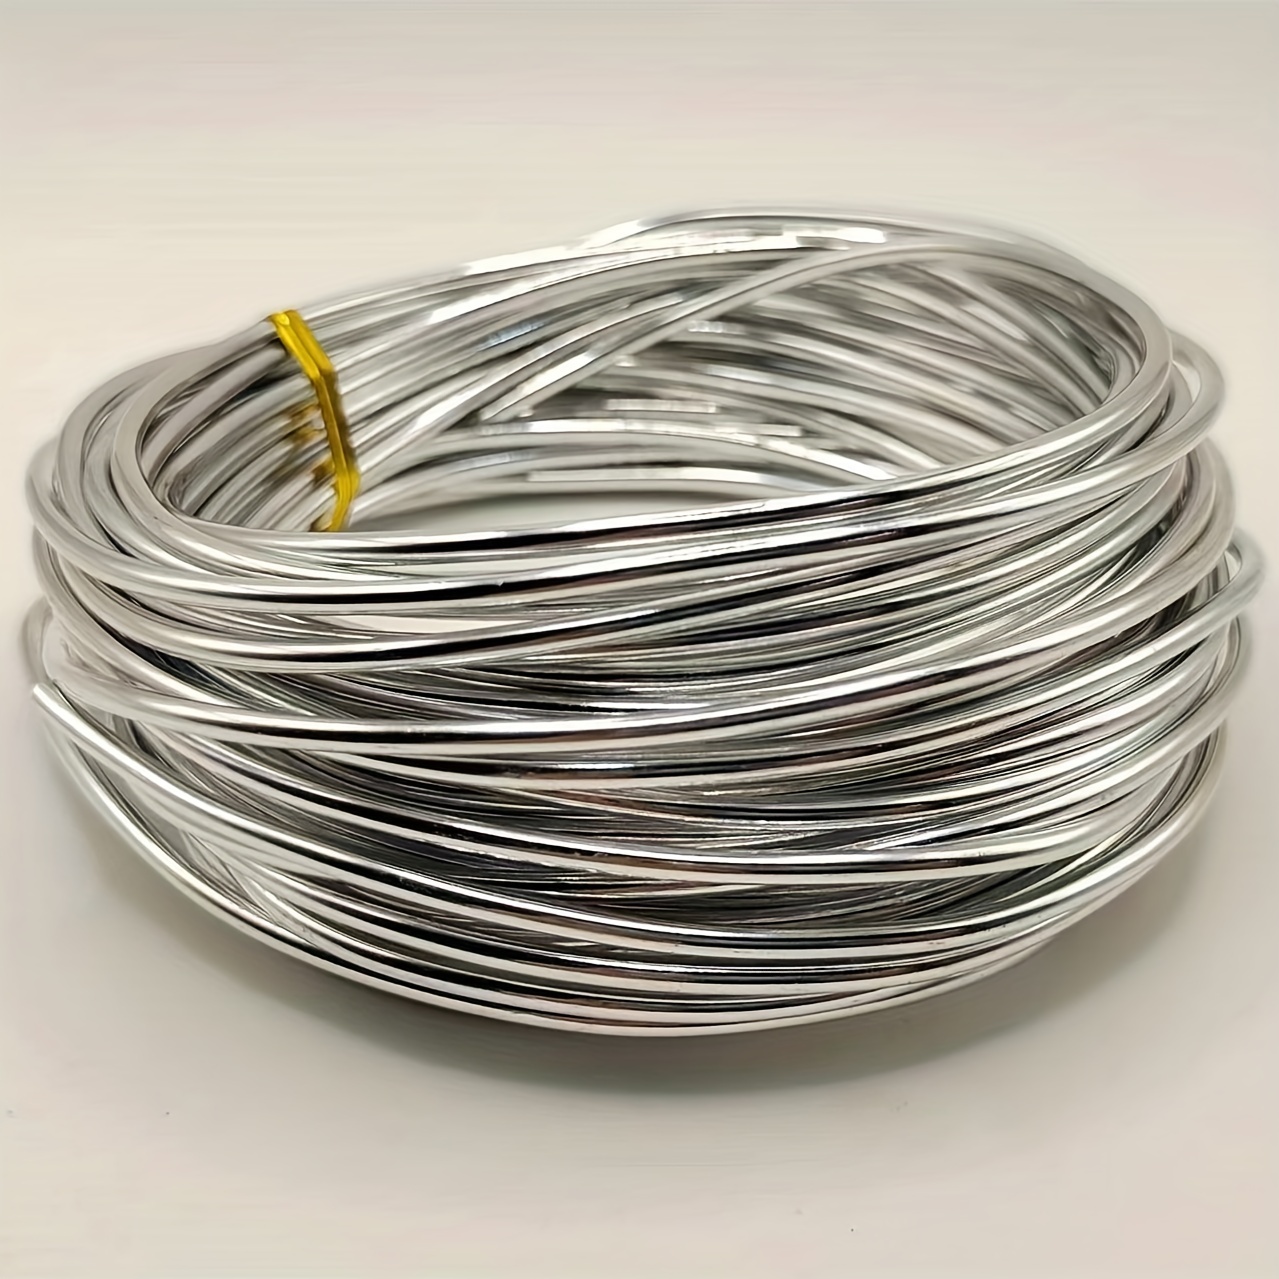 GloproStore 33ft Thin Silver Aluminium craft wire 1mm diameter for